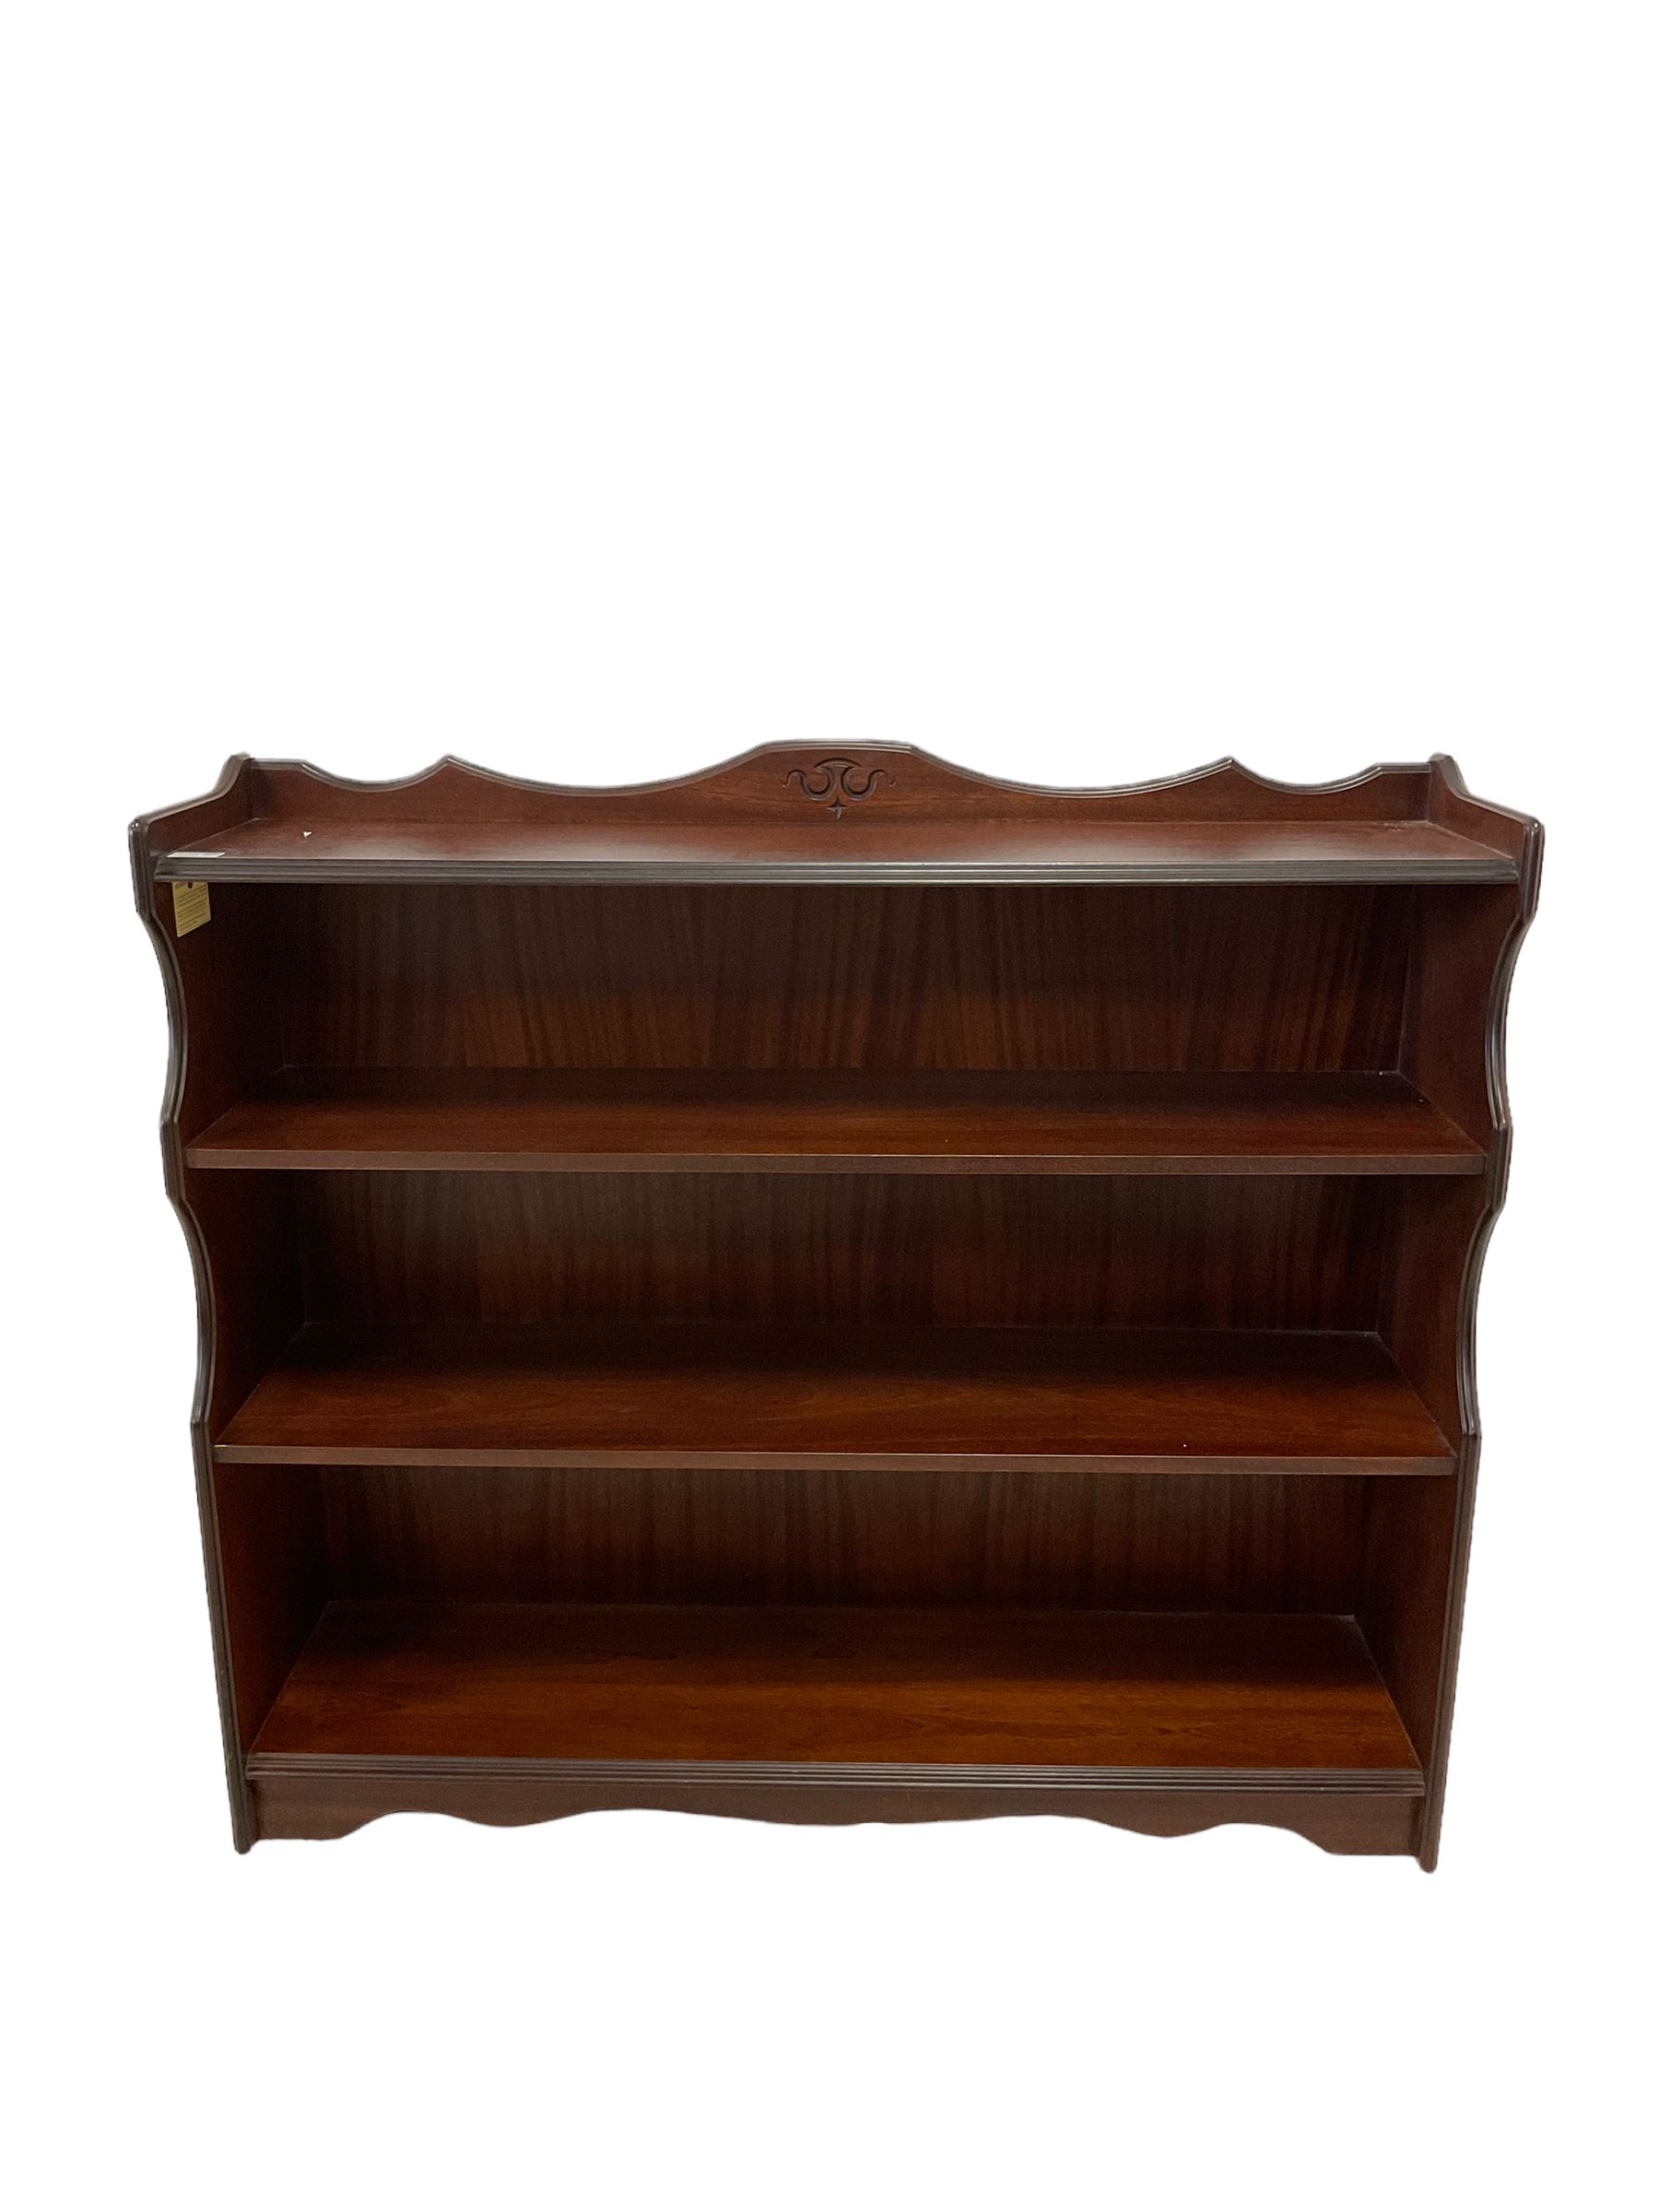 Rossmore mahogany bookcase - Image 3 of 3